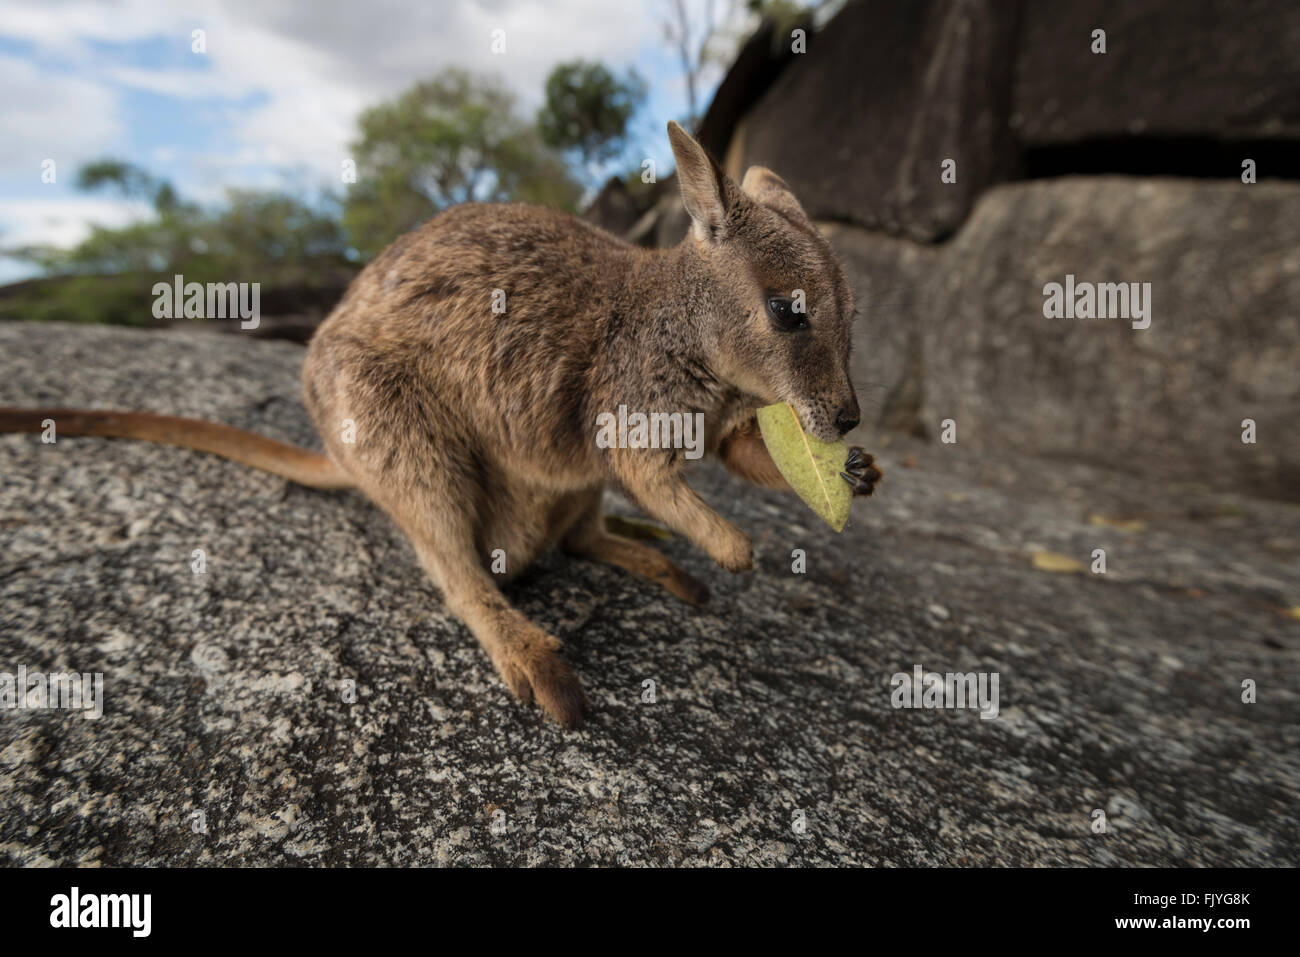 Mareeba rock-wallaby (Petrogale mareeba) eating a gum tree leaf Stock Photo